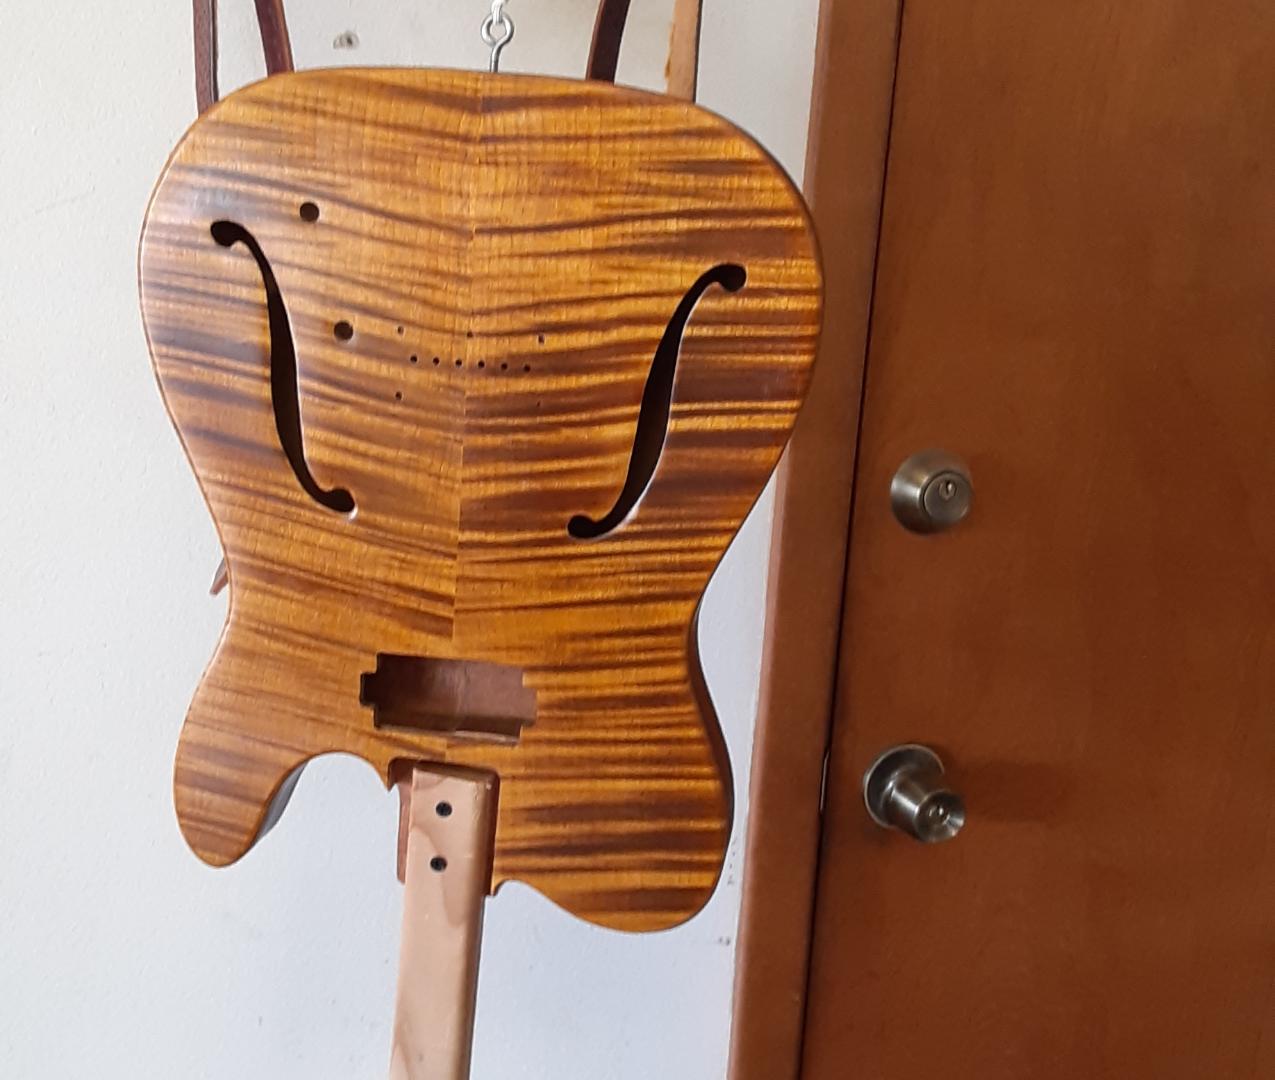 New Violinmaster Telecaster Relic Guitar From Fender’s Custom Shop-t2-jpg